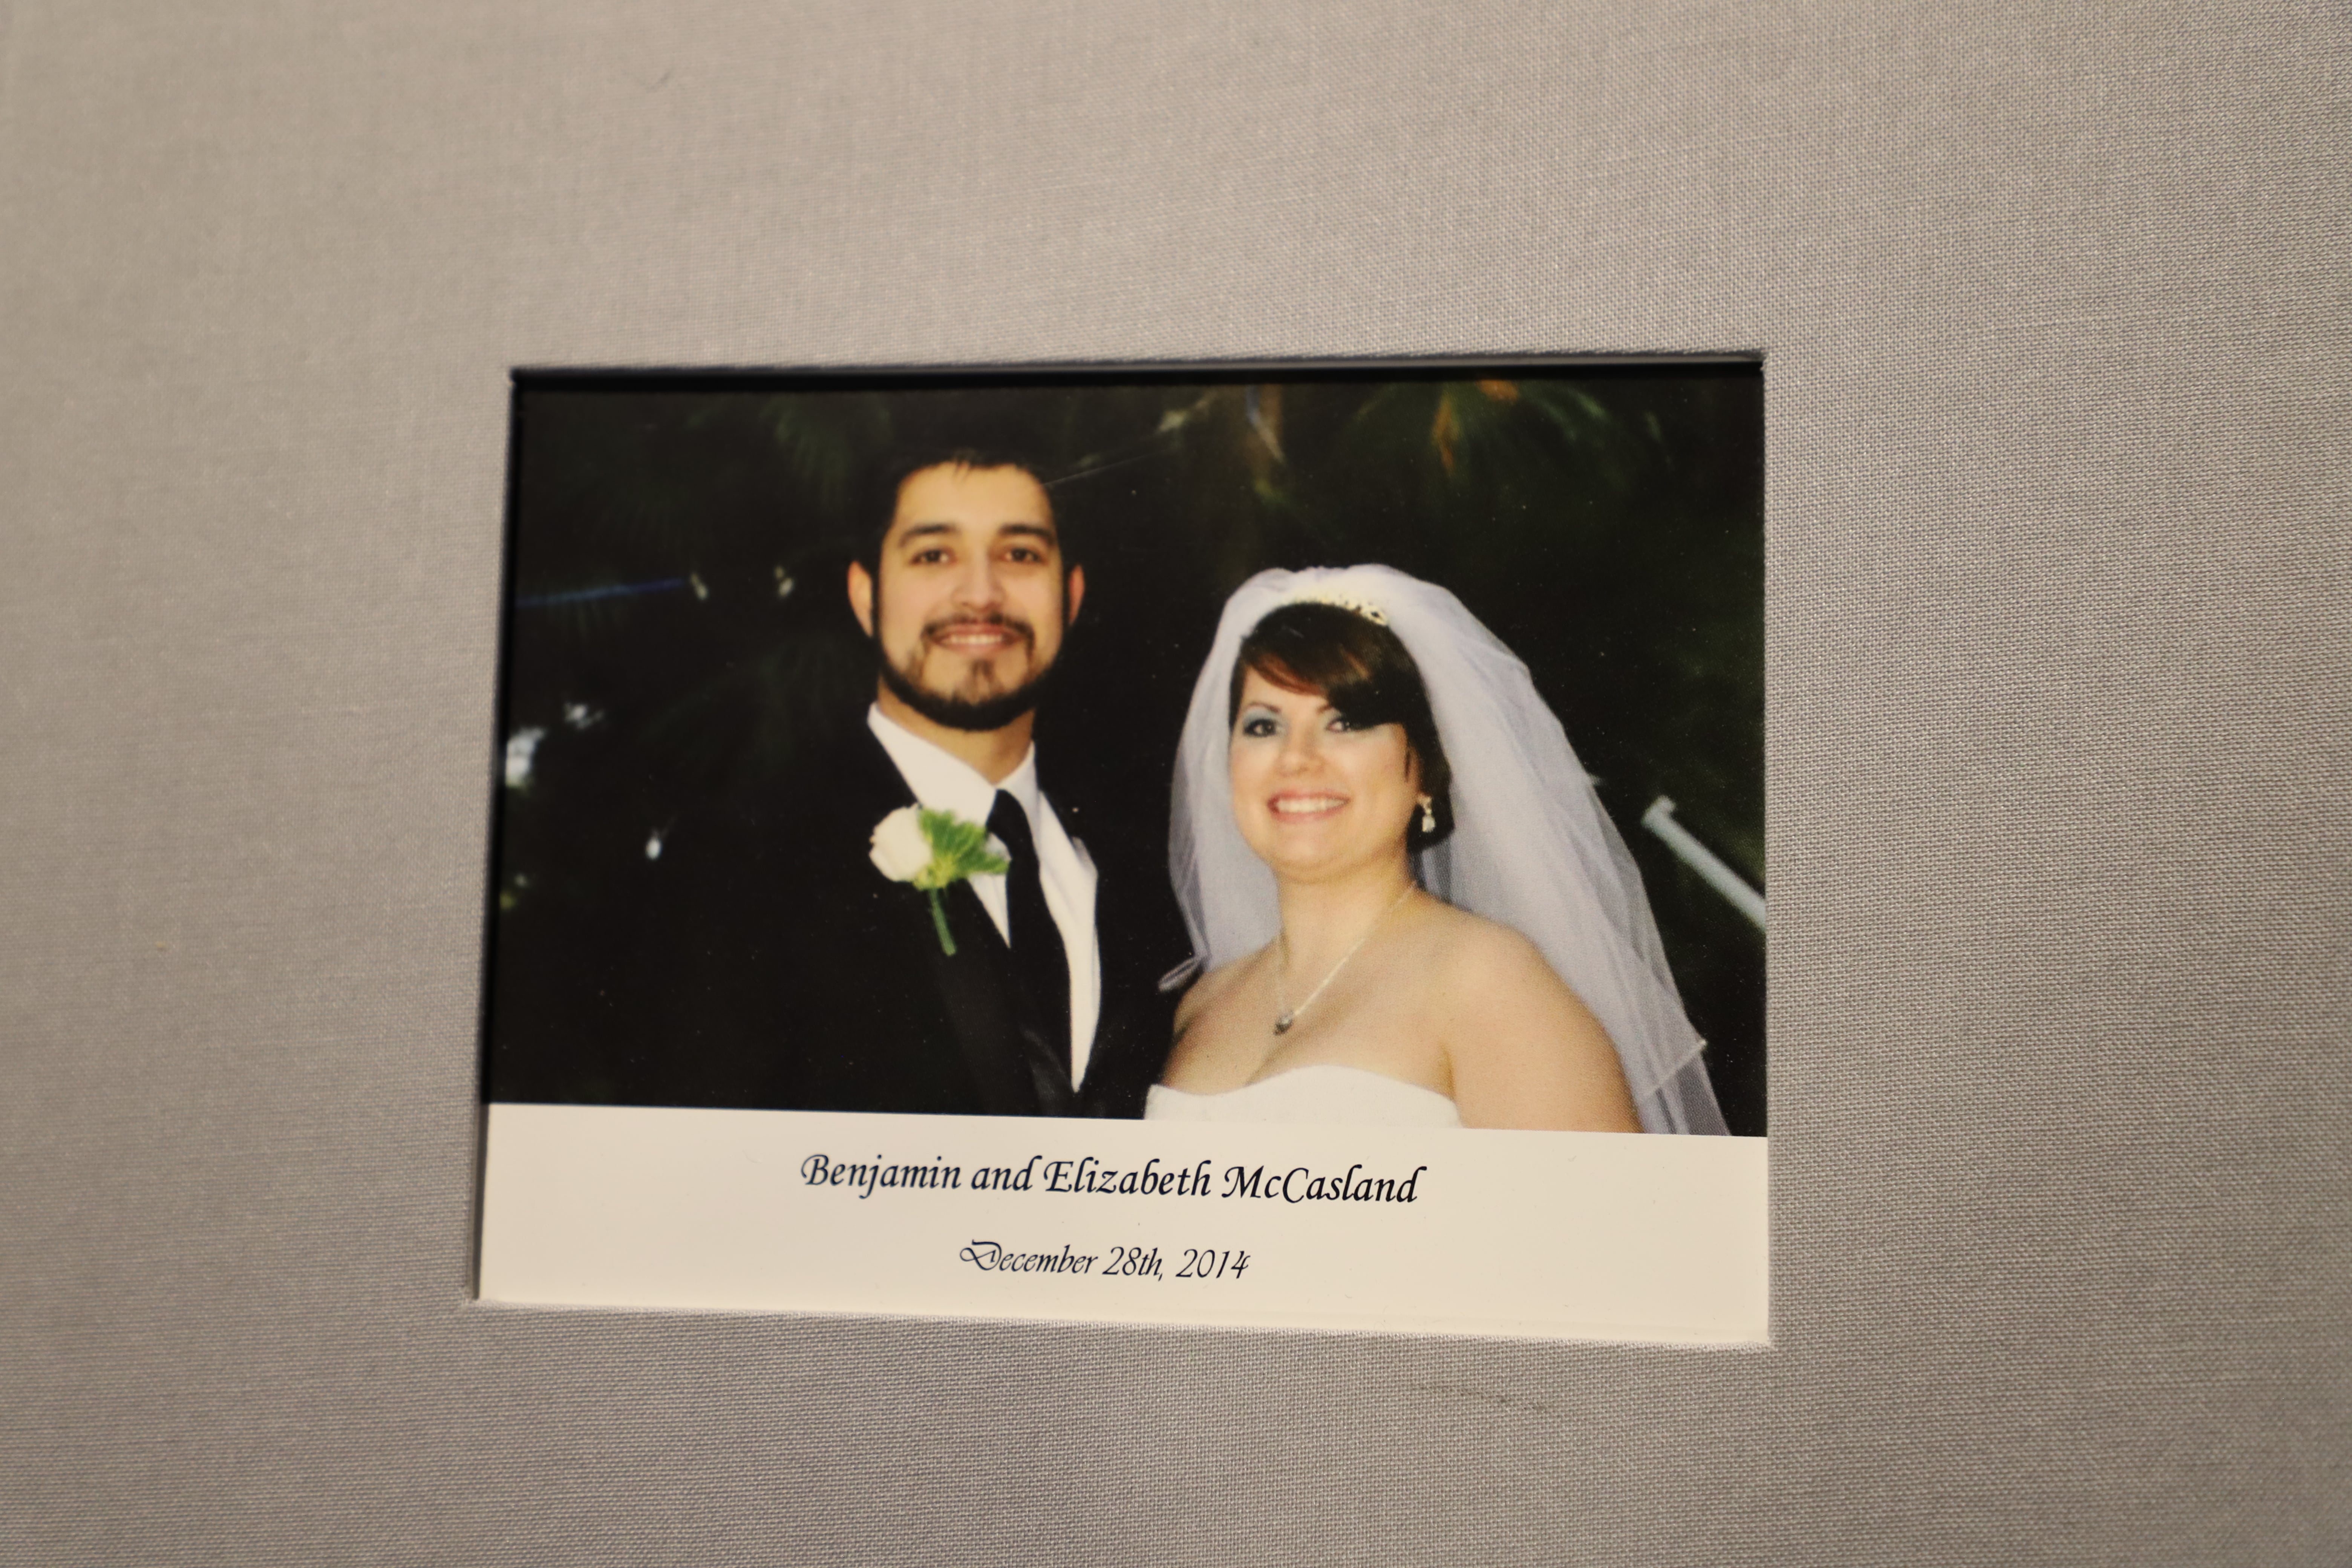 Ben and Liz McCasland's wedding photo on the cover of a wedding album.